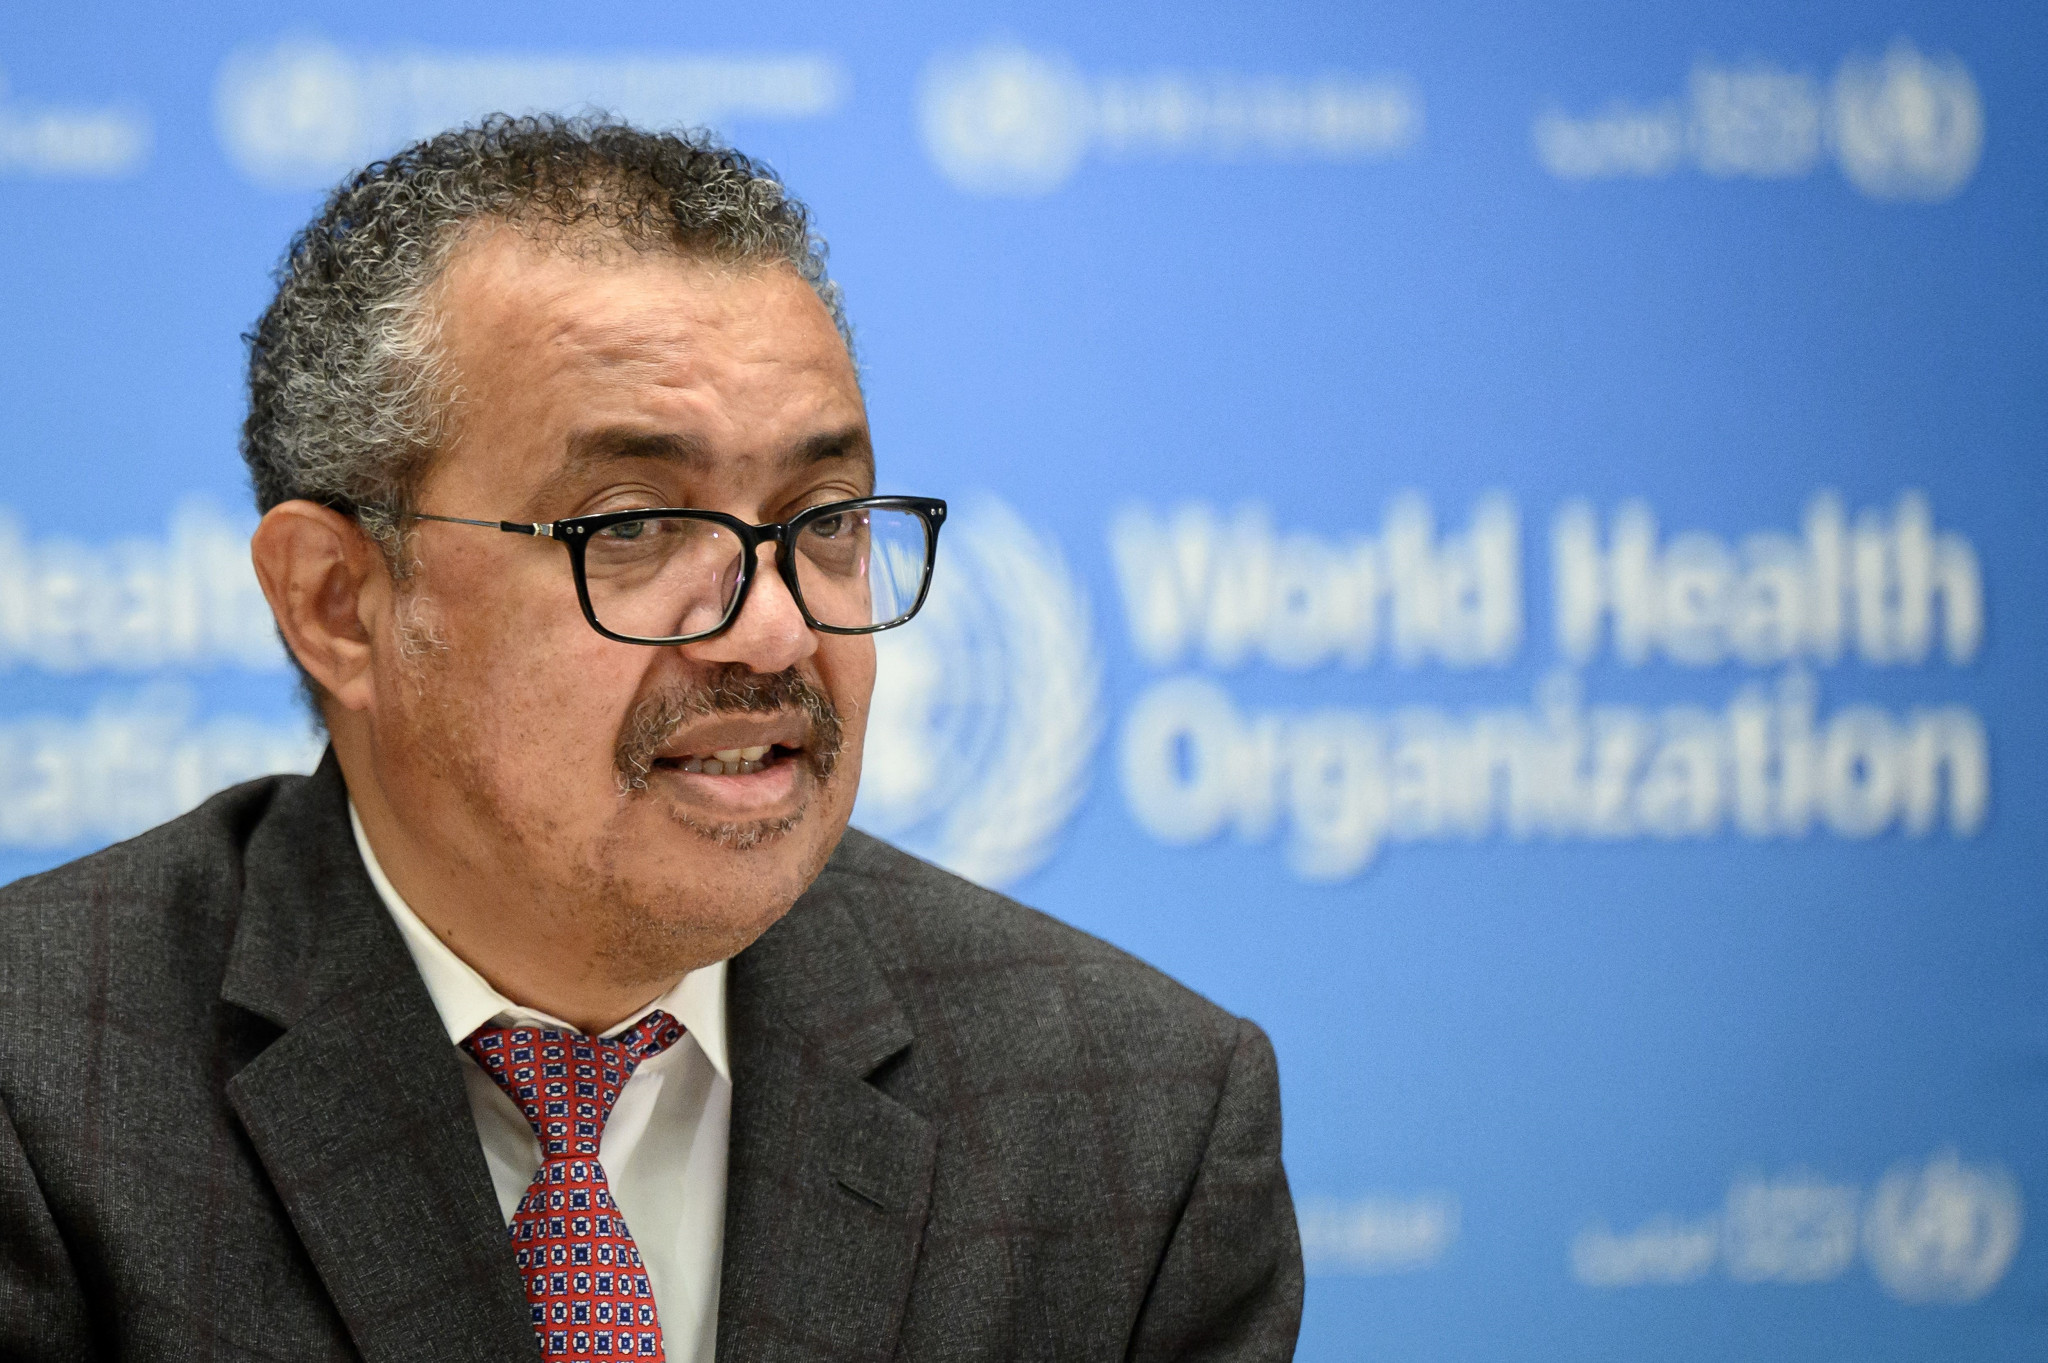 WHO director general Tedros Adhanom Ghebreyesus claimed the risk of monkeypox was 